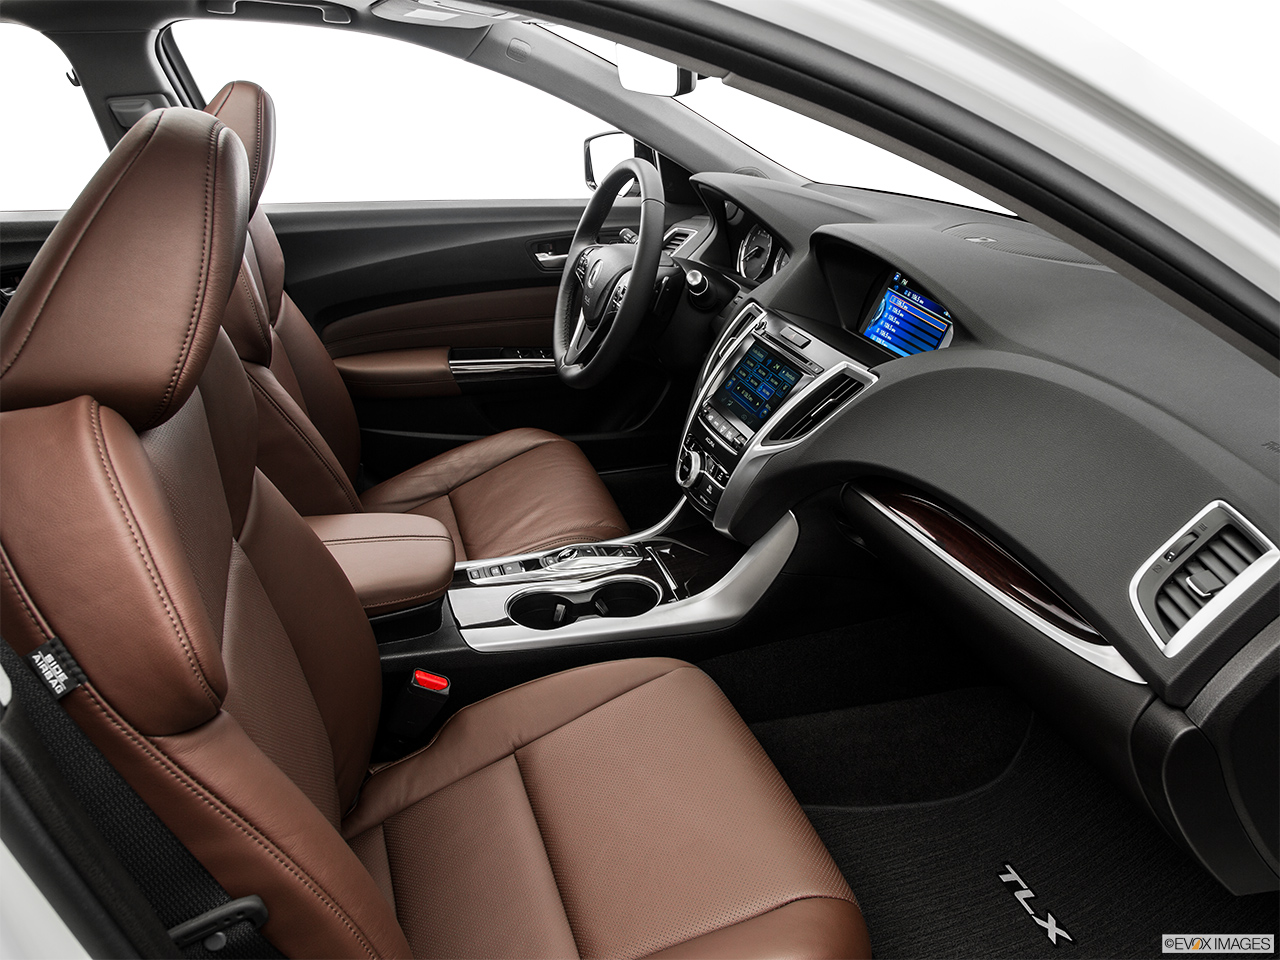 2015 Acura TLX 3.5 V-6 9-AT SH-AWD Passenger seat. 